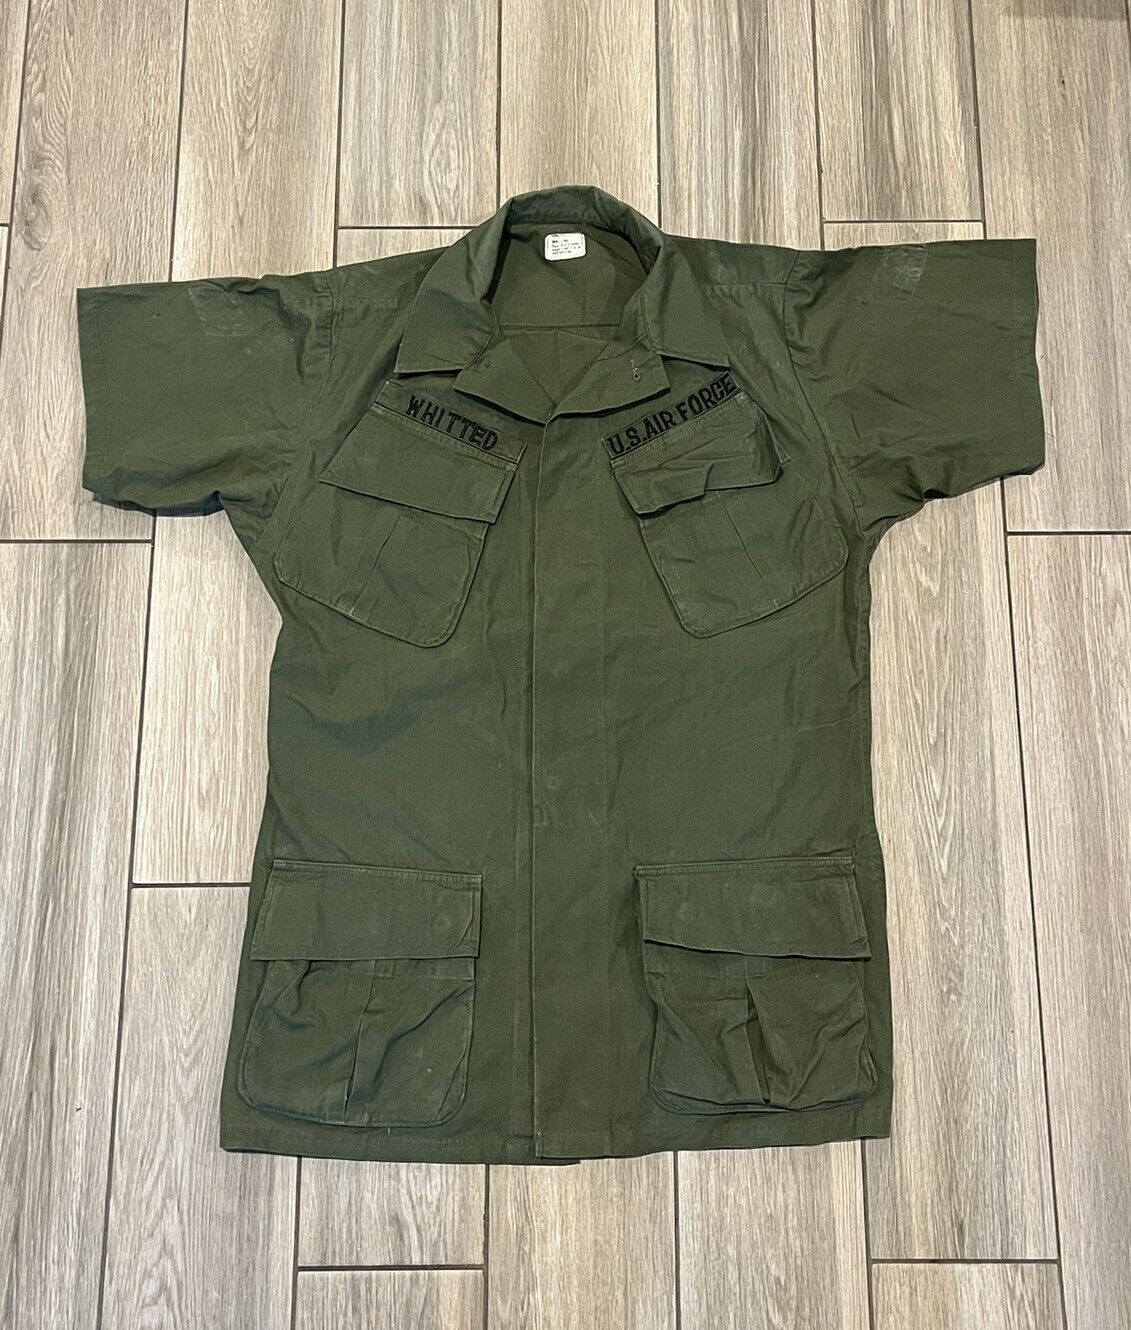 Vietnam 1968 Tropical Jungle Short Sleeve Rip-Stop Poplin OG-107 Coat Small Long